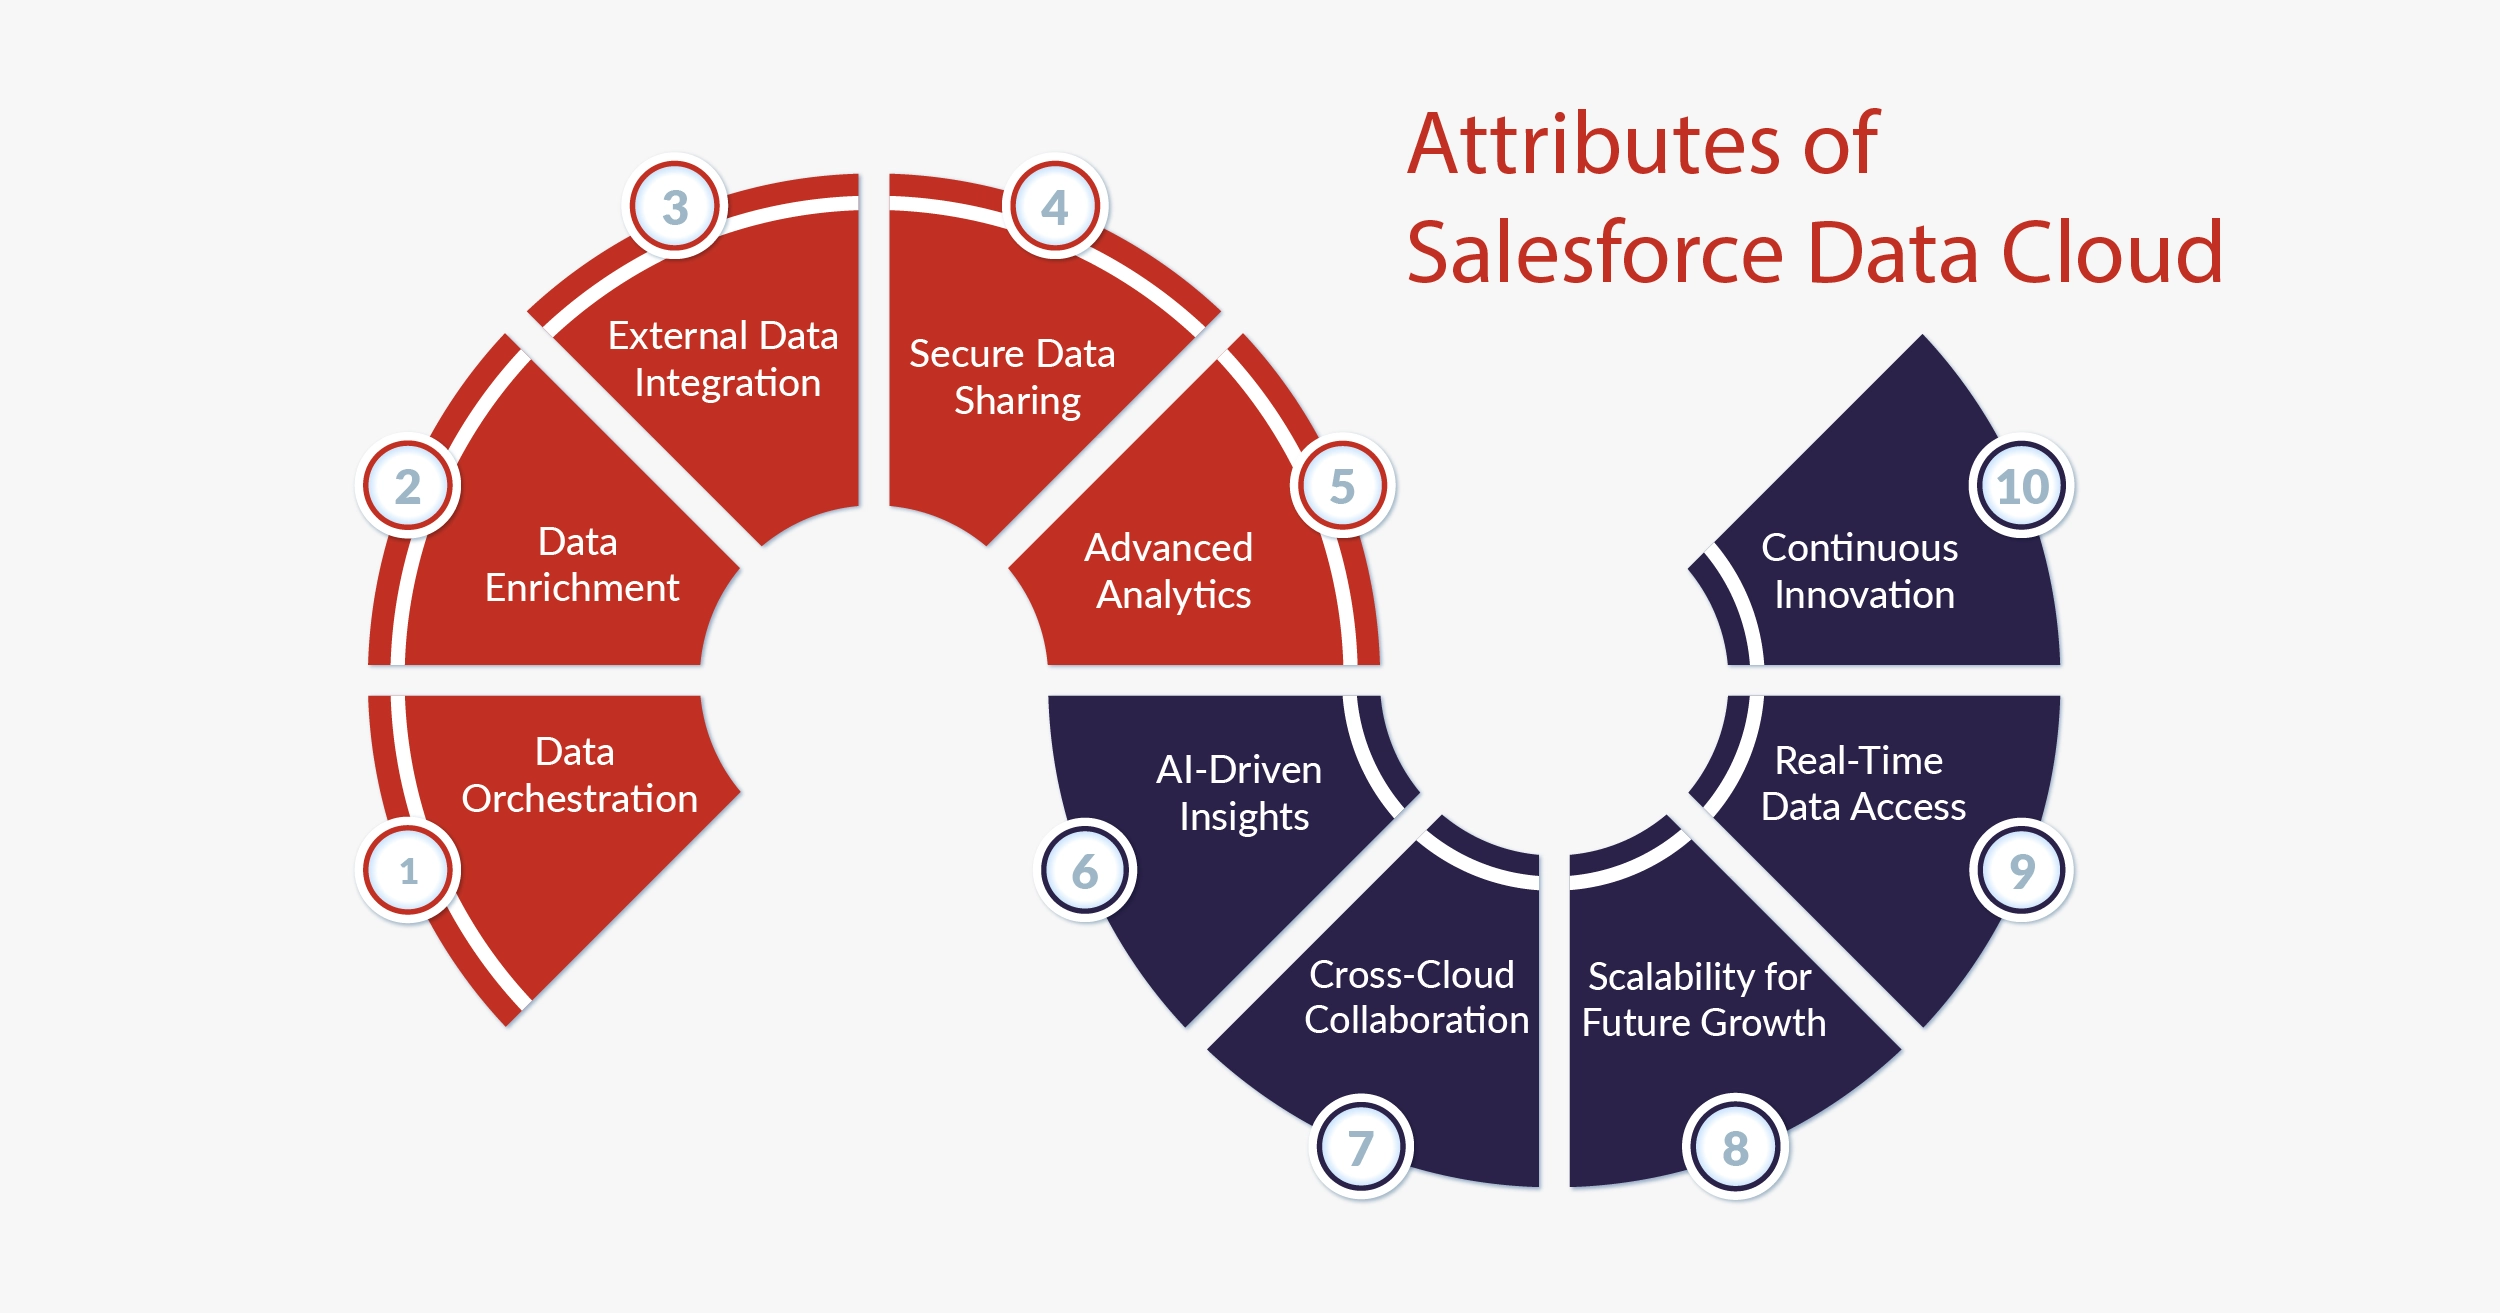 Attributes of Salesforce Data Cloud